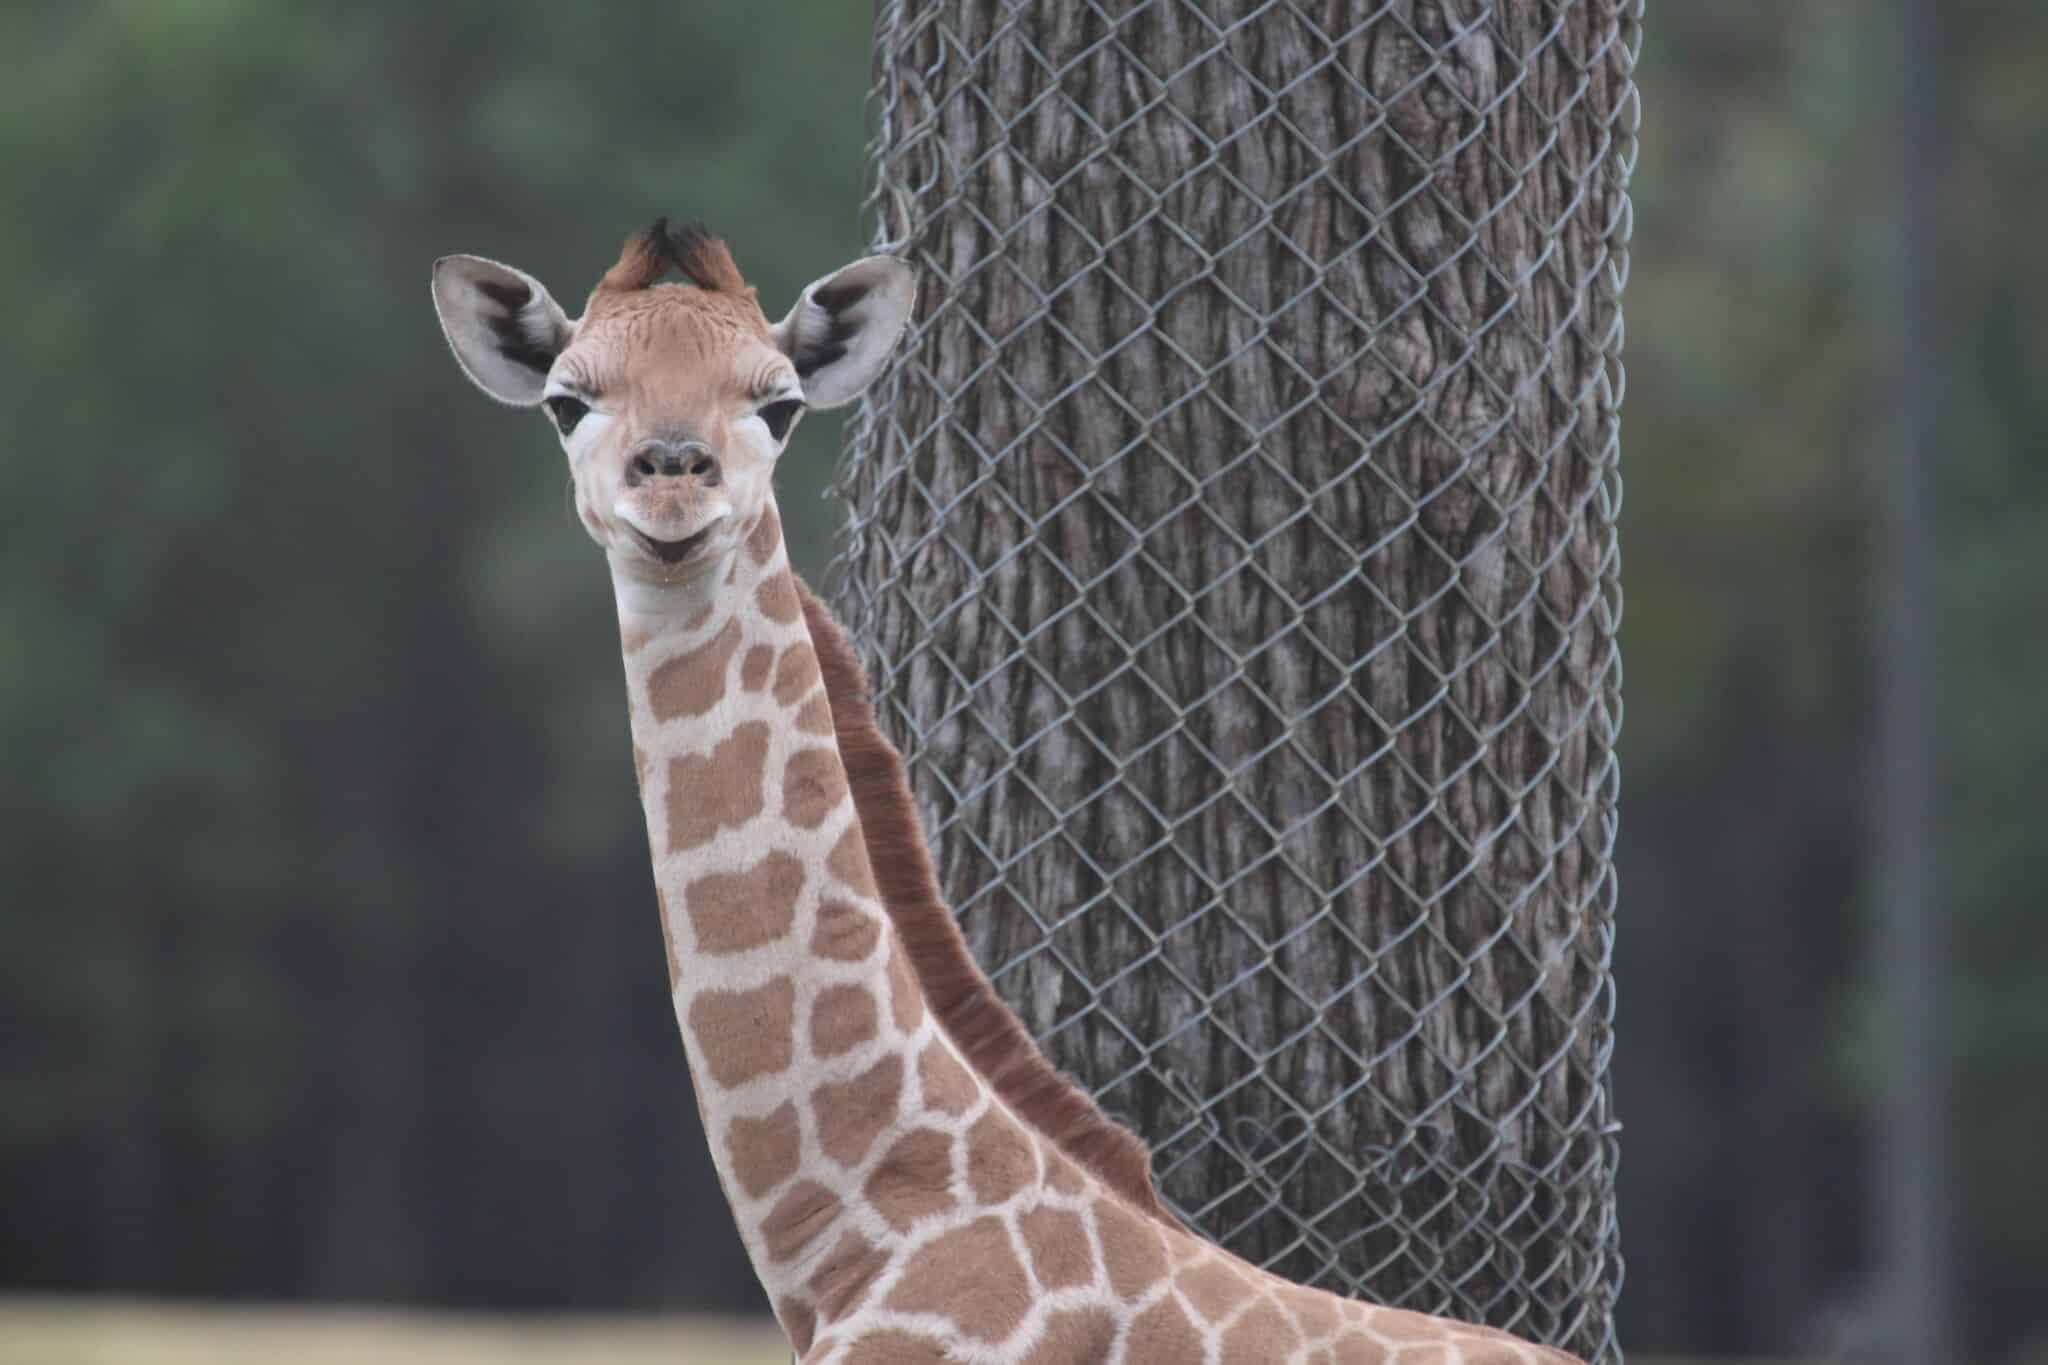 Baby giraffe at Taronga Western Plains Zoo